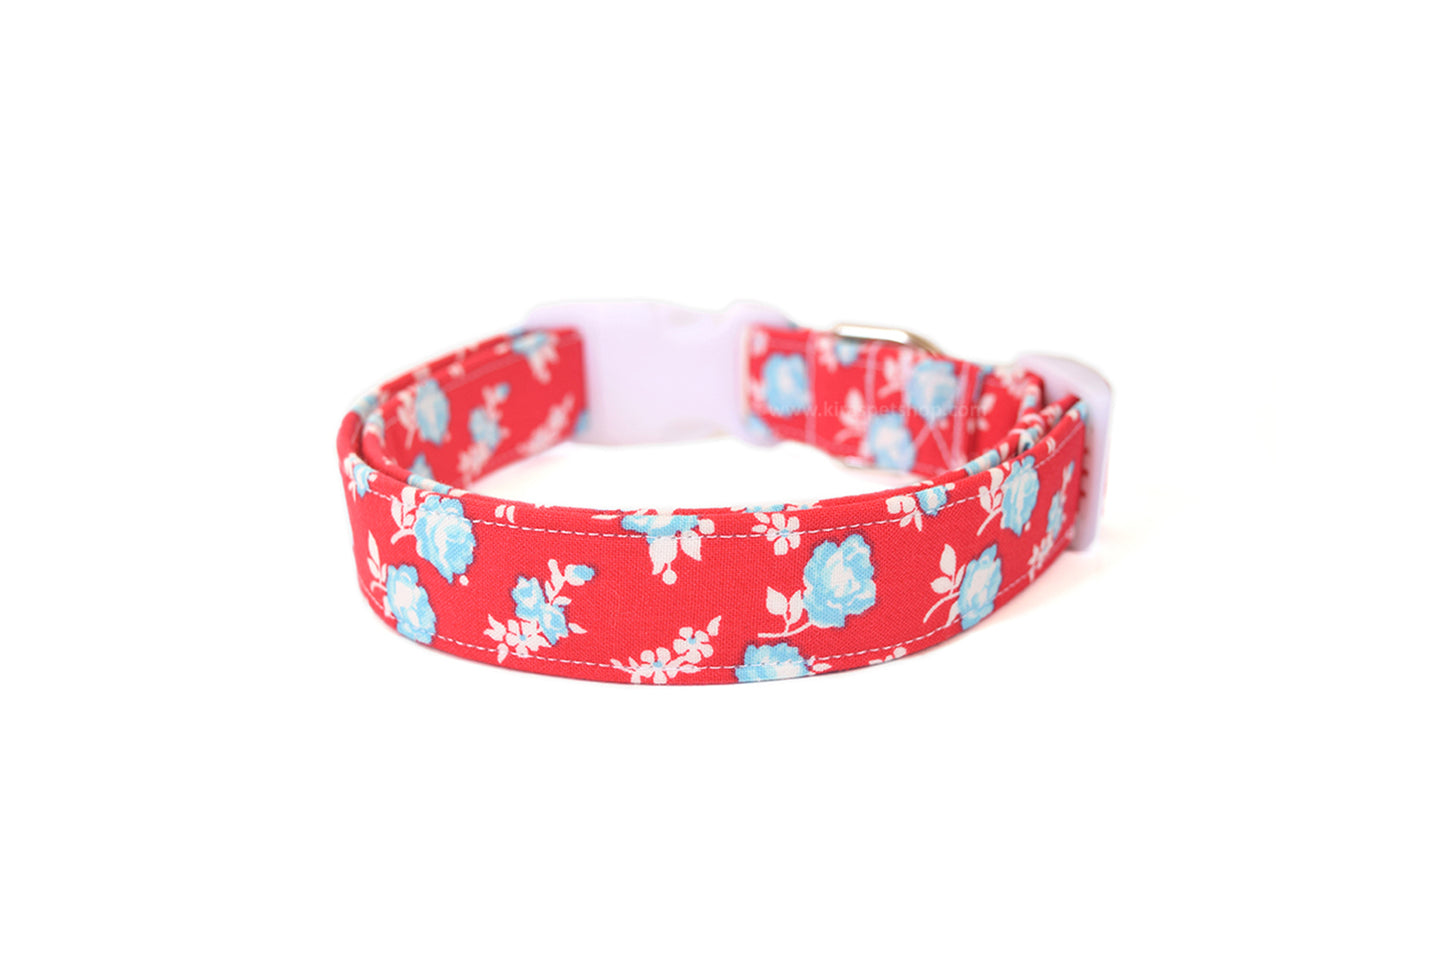 Red & Blue Floral Dog Collar - Handmade by Kira's Pet Shop